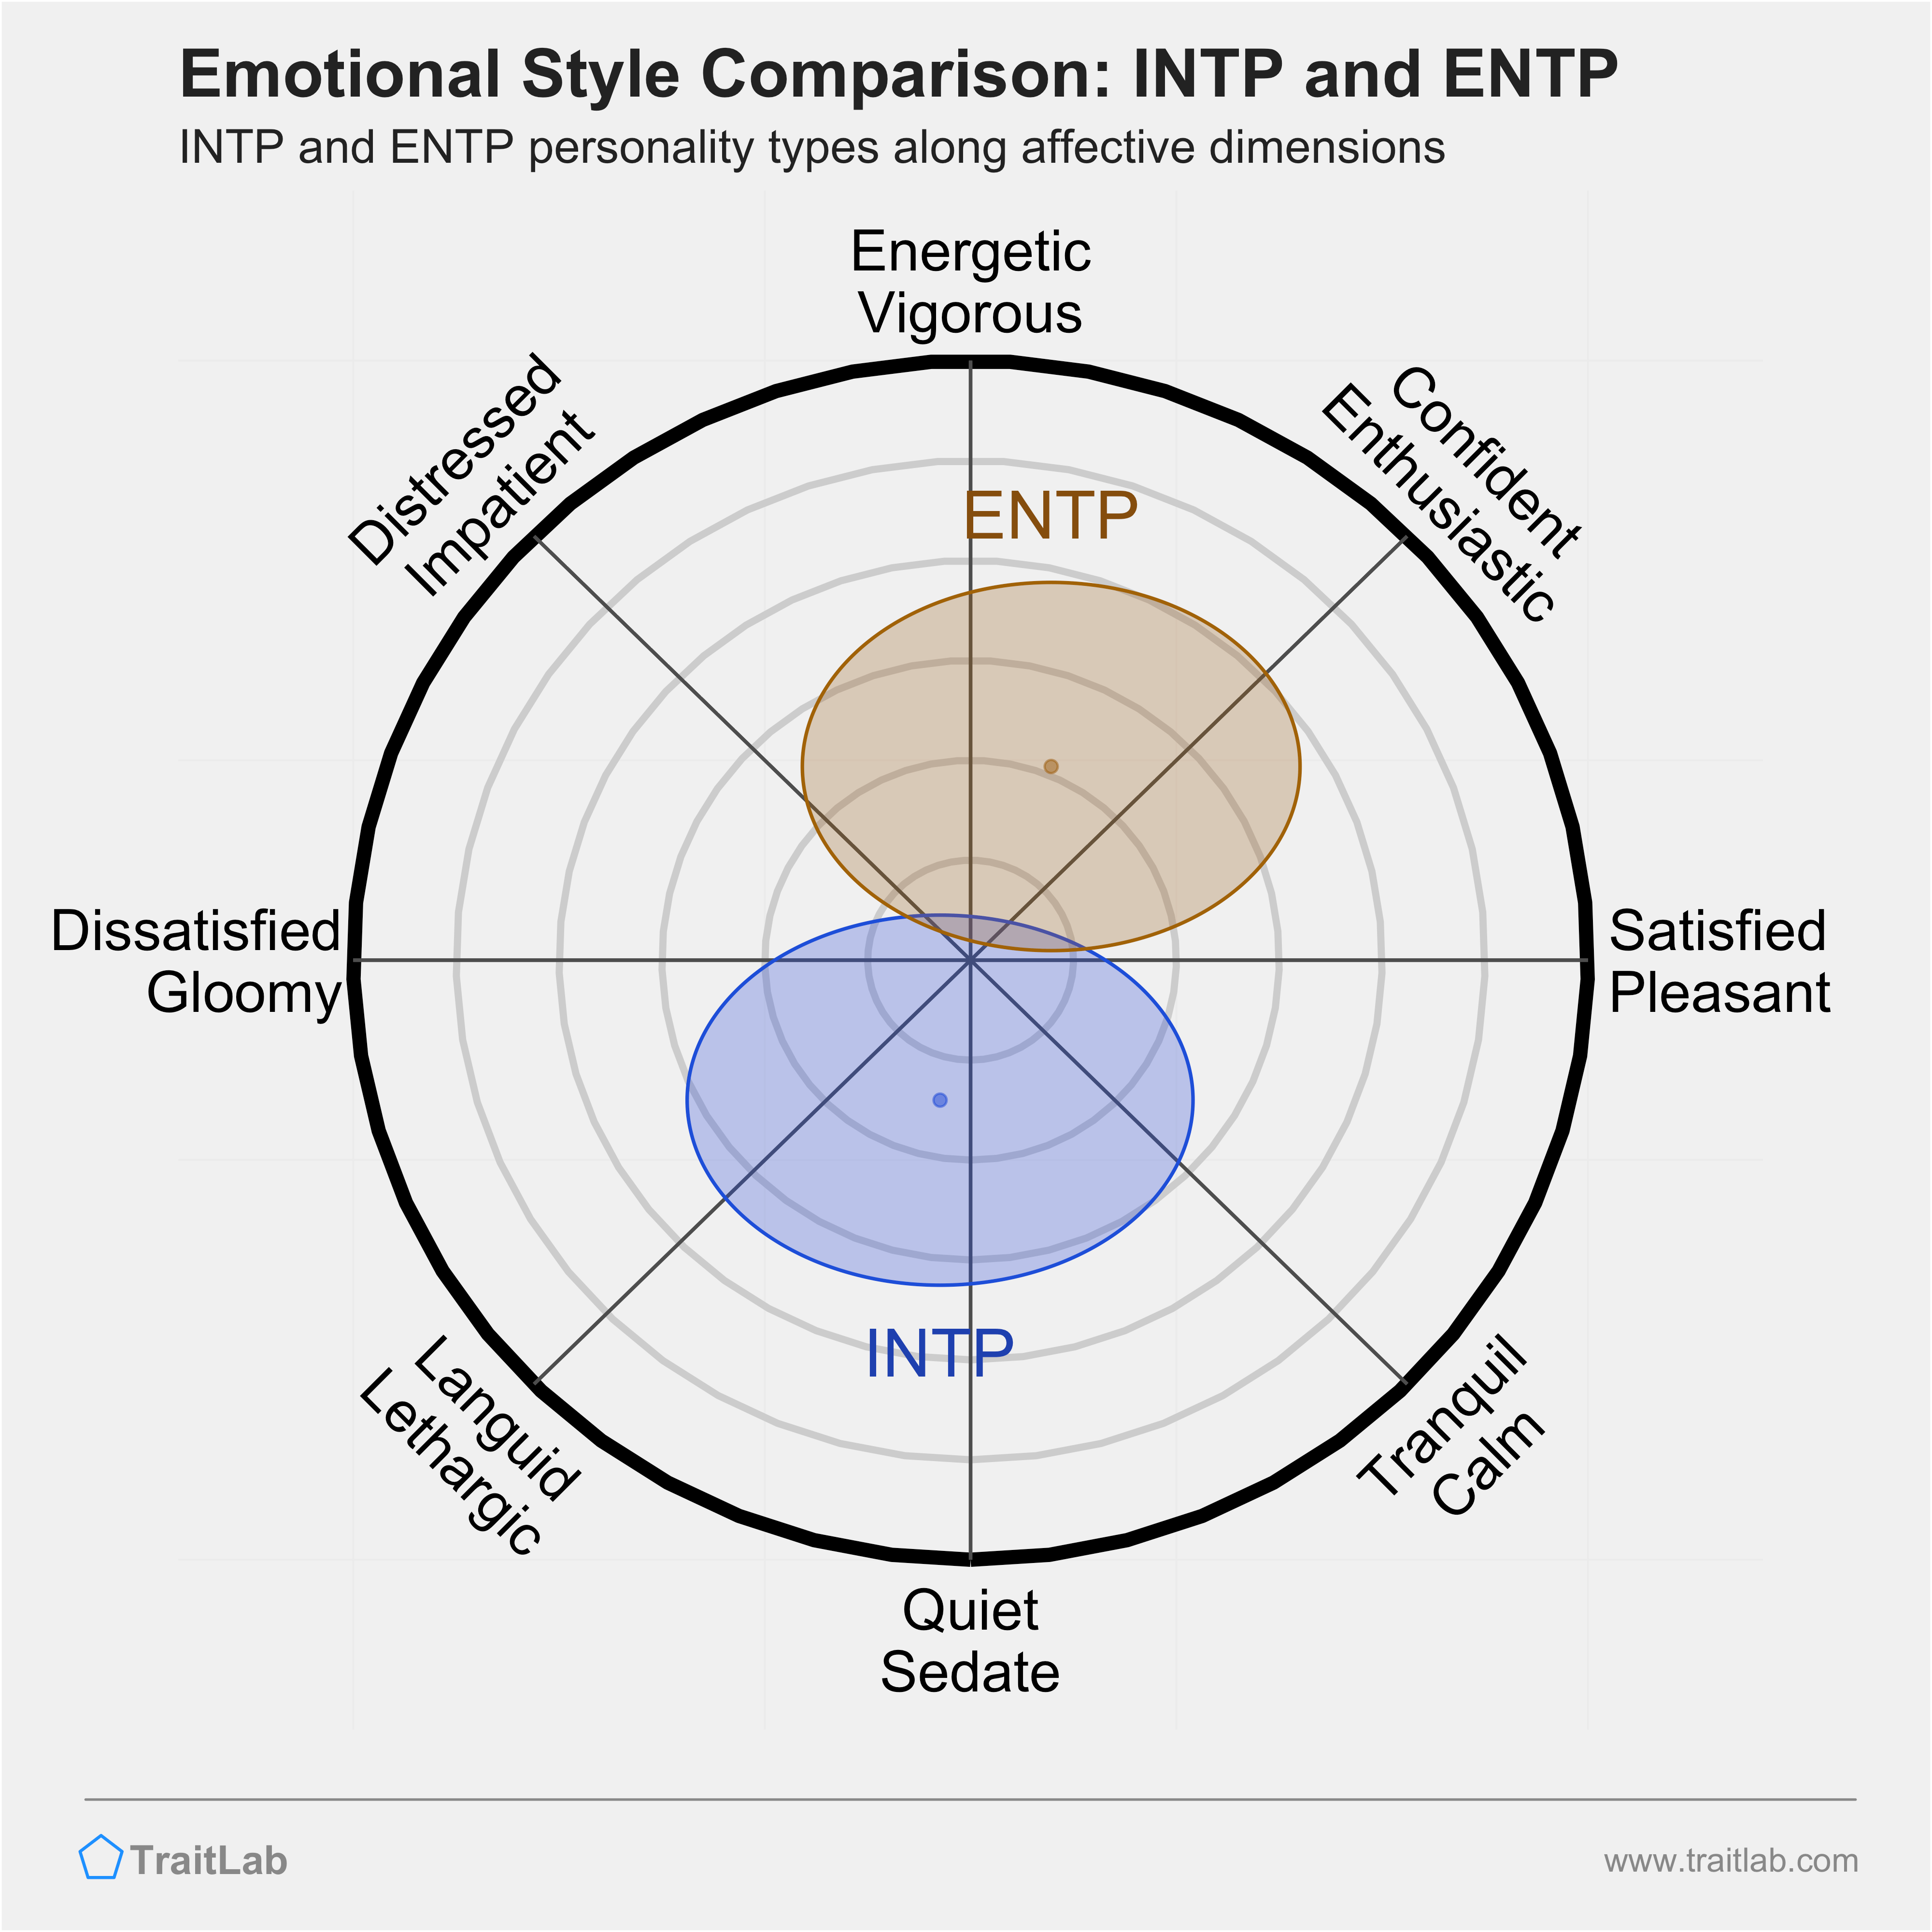 INTP and ENTP comparison across emotional (affective) dimensions